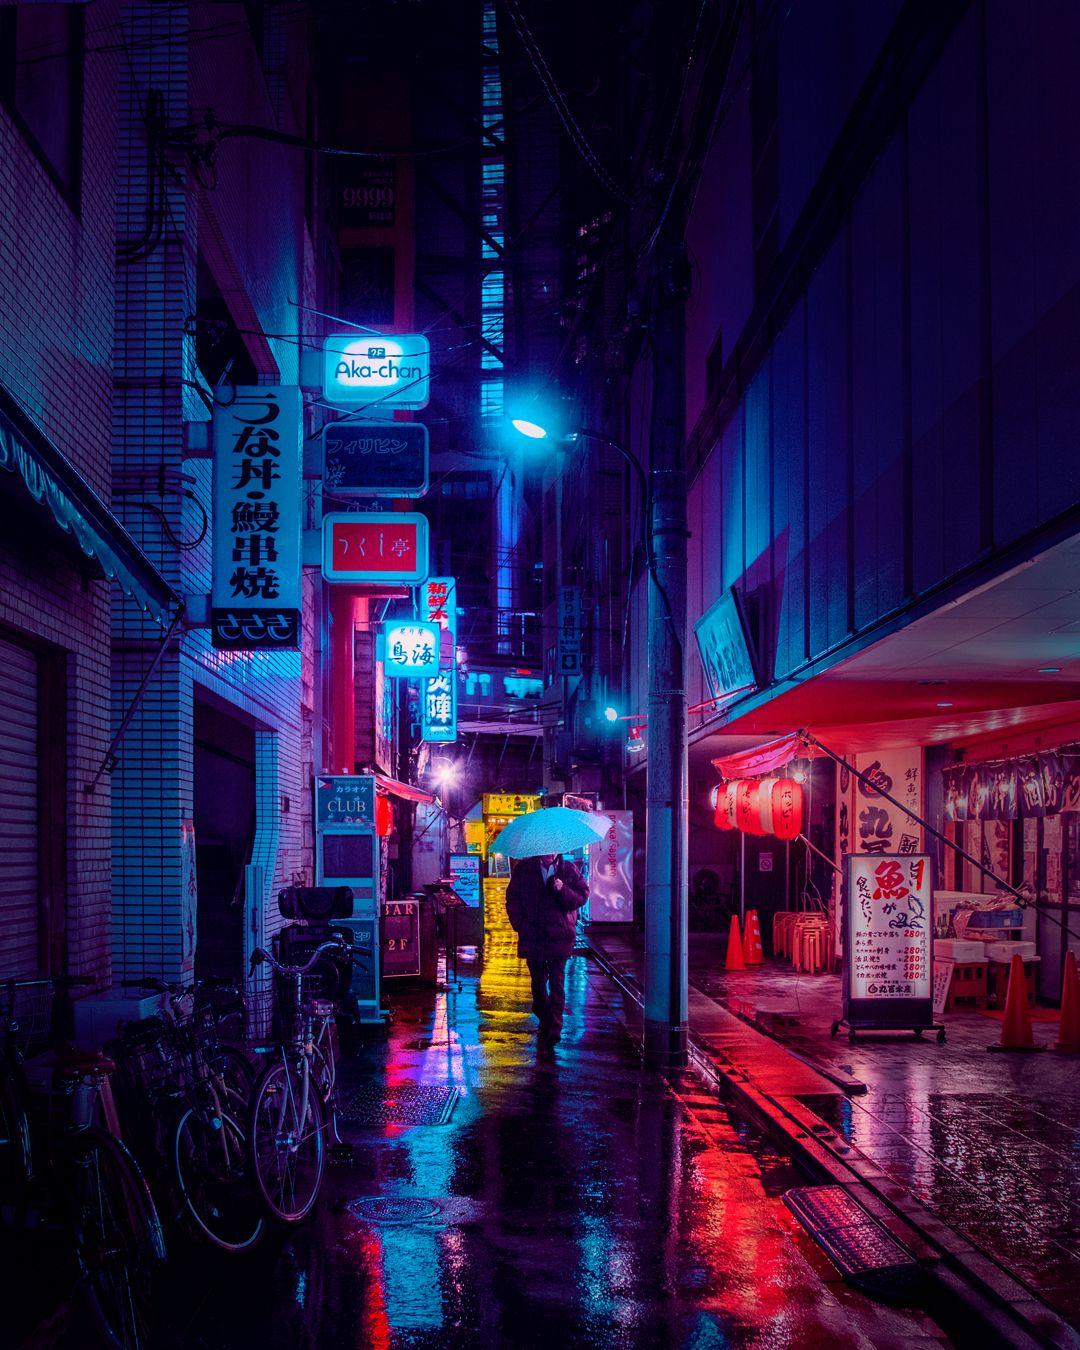 Aesthetic Tokyo Rain Wallpapers - Top Free Aesthetic Tokyo Rain ...